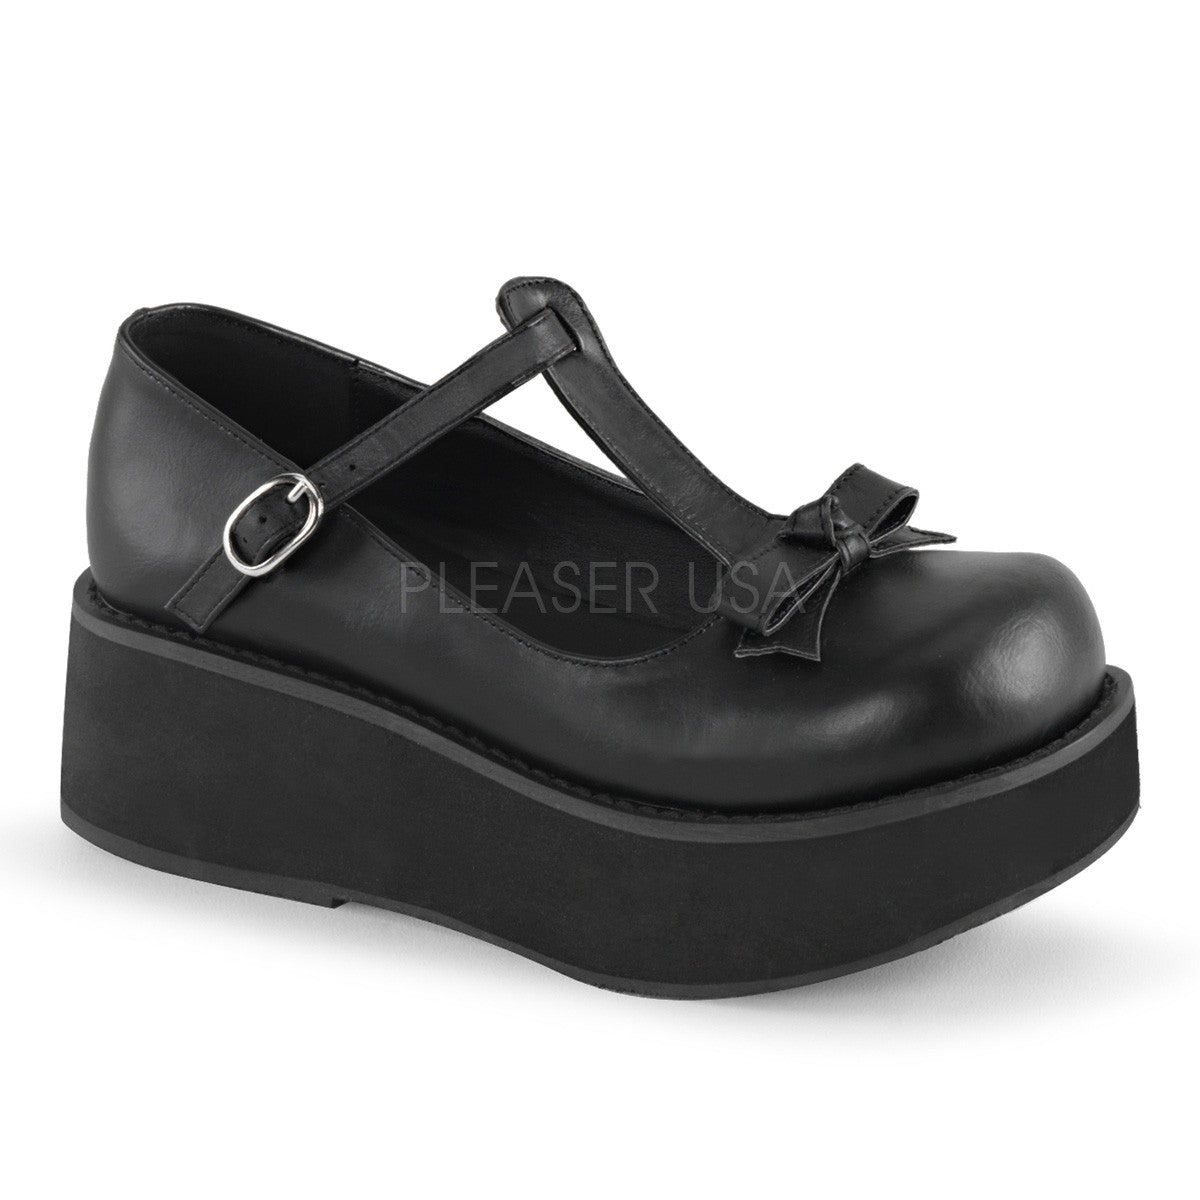 Demonia SPRITE-03 Black Vegan Leather Shoes - Shoecup.com - 1